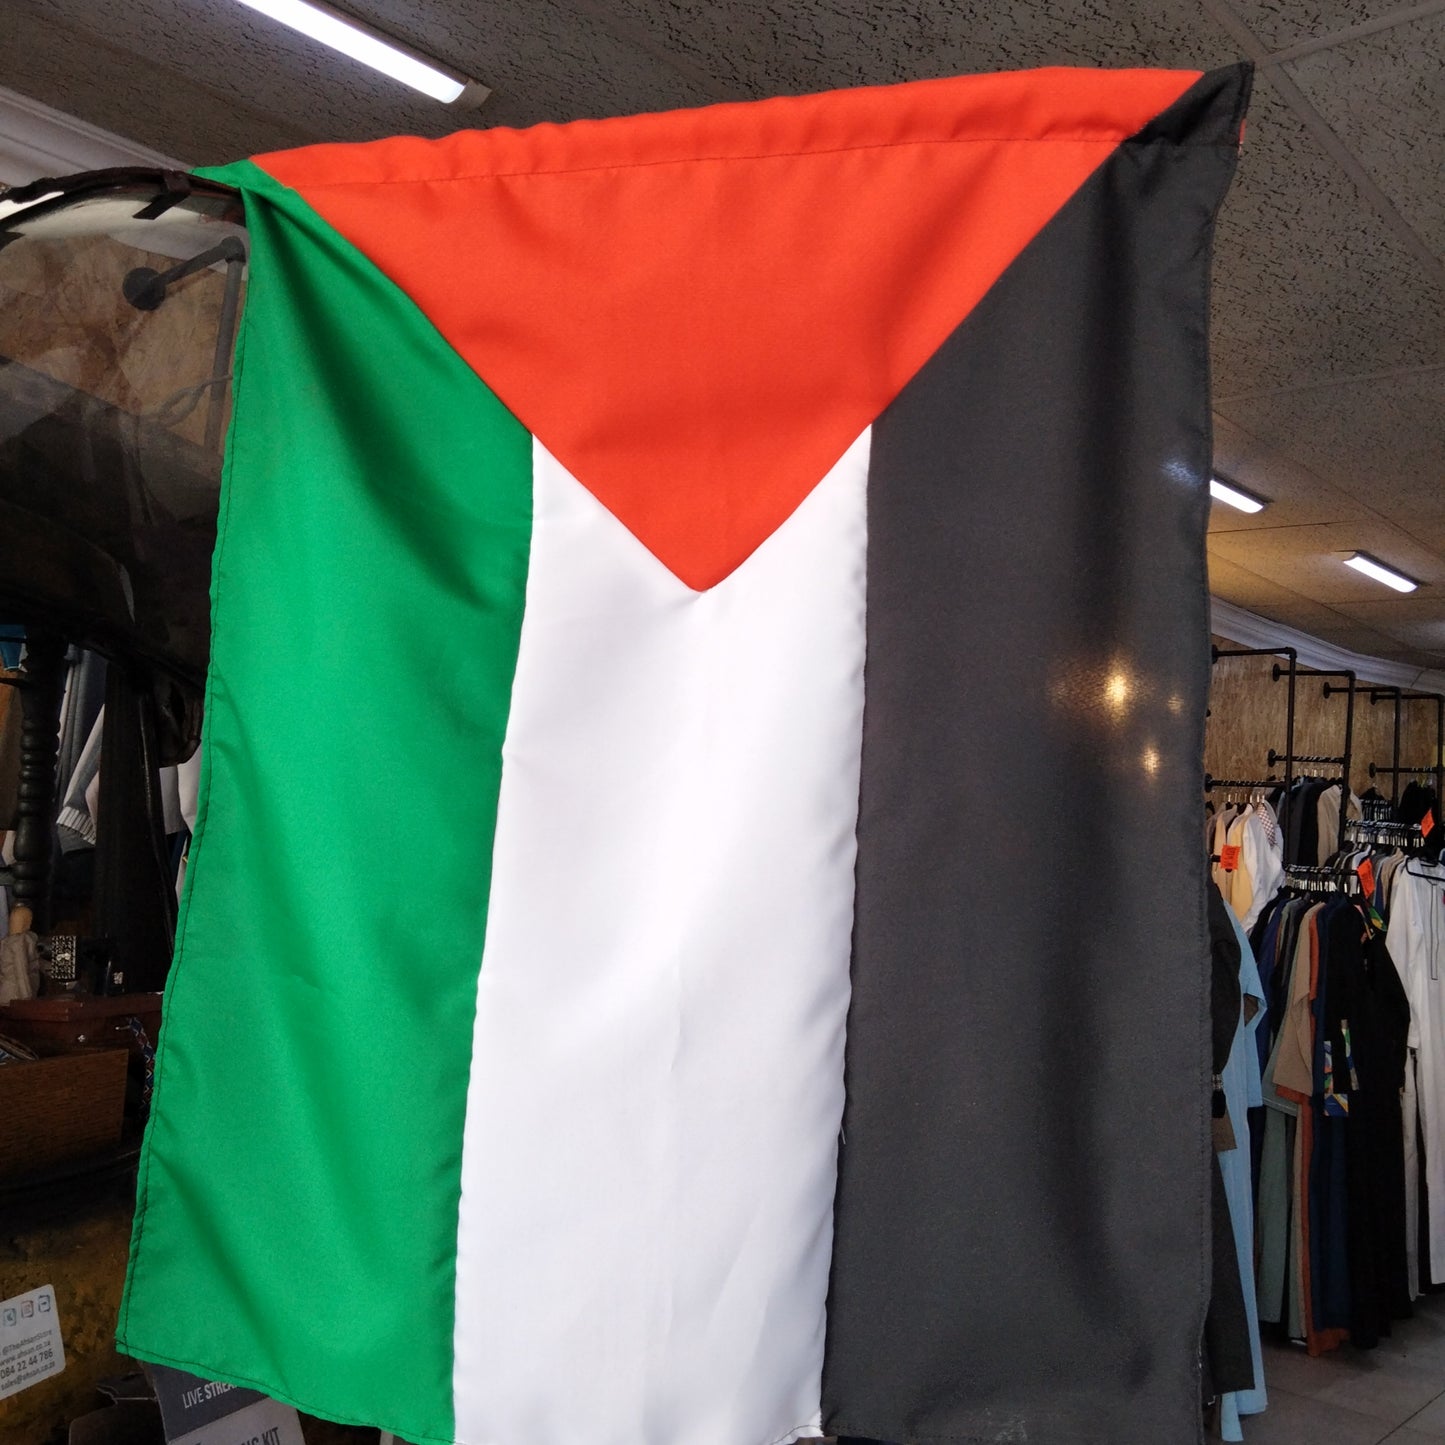 Palestine flags